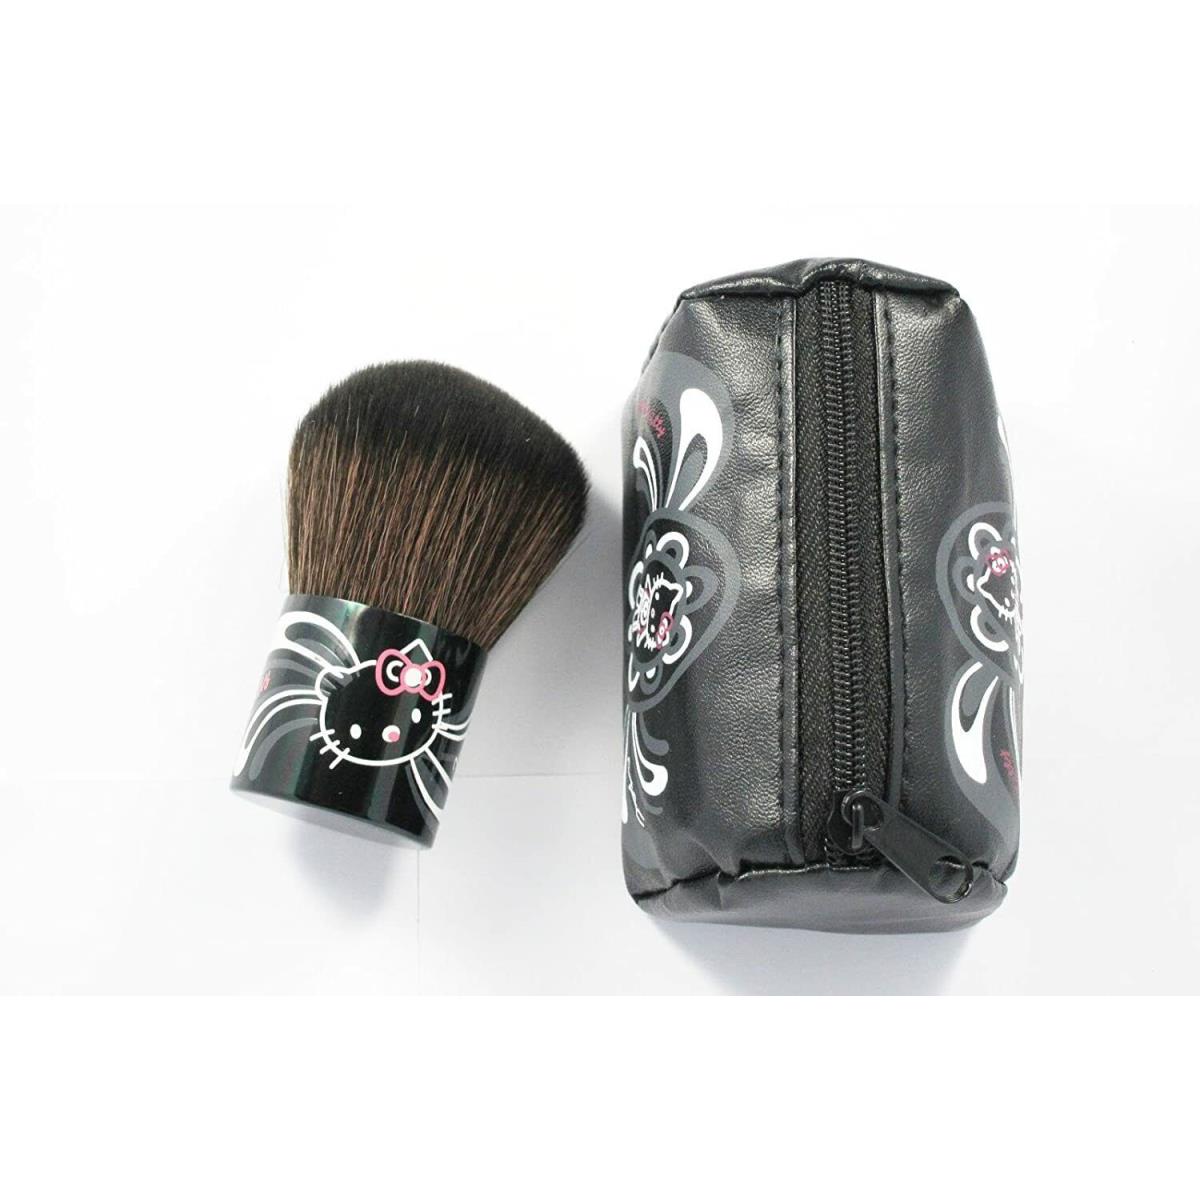 Mac Hello Kitty Kabuki Buffer Face Powder Brush and Carrying Pouch